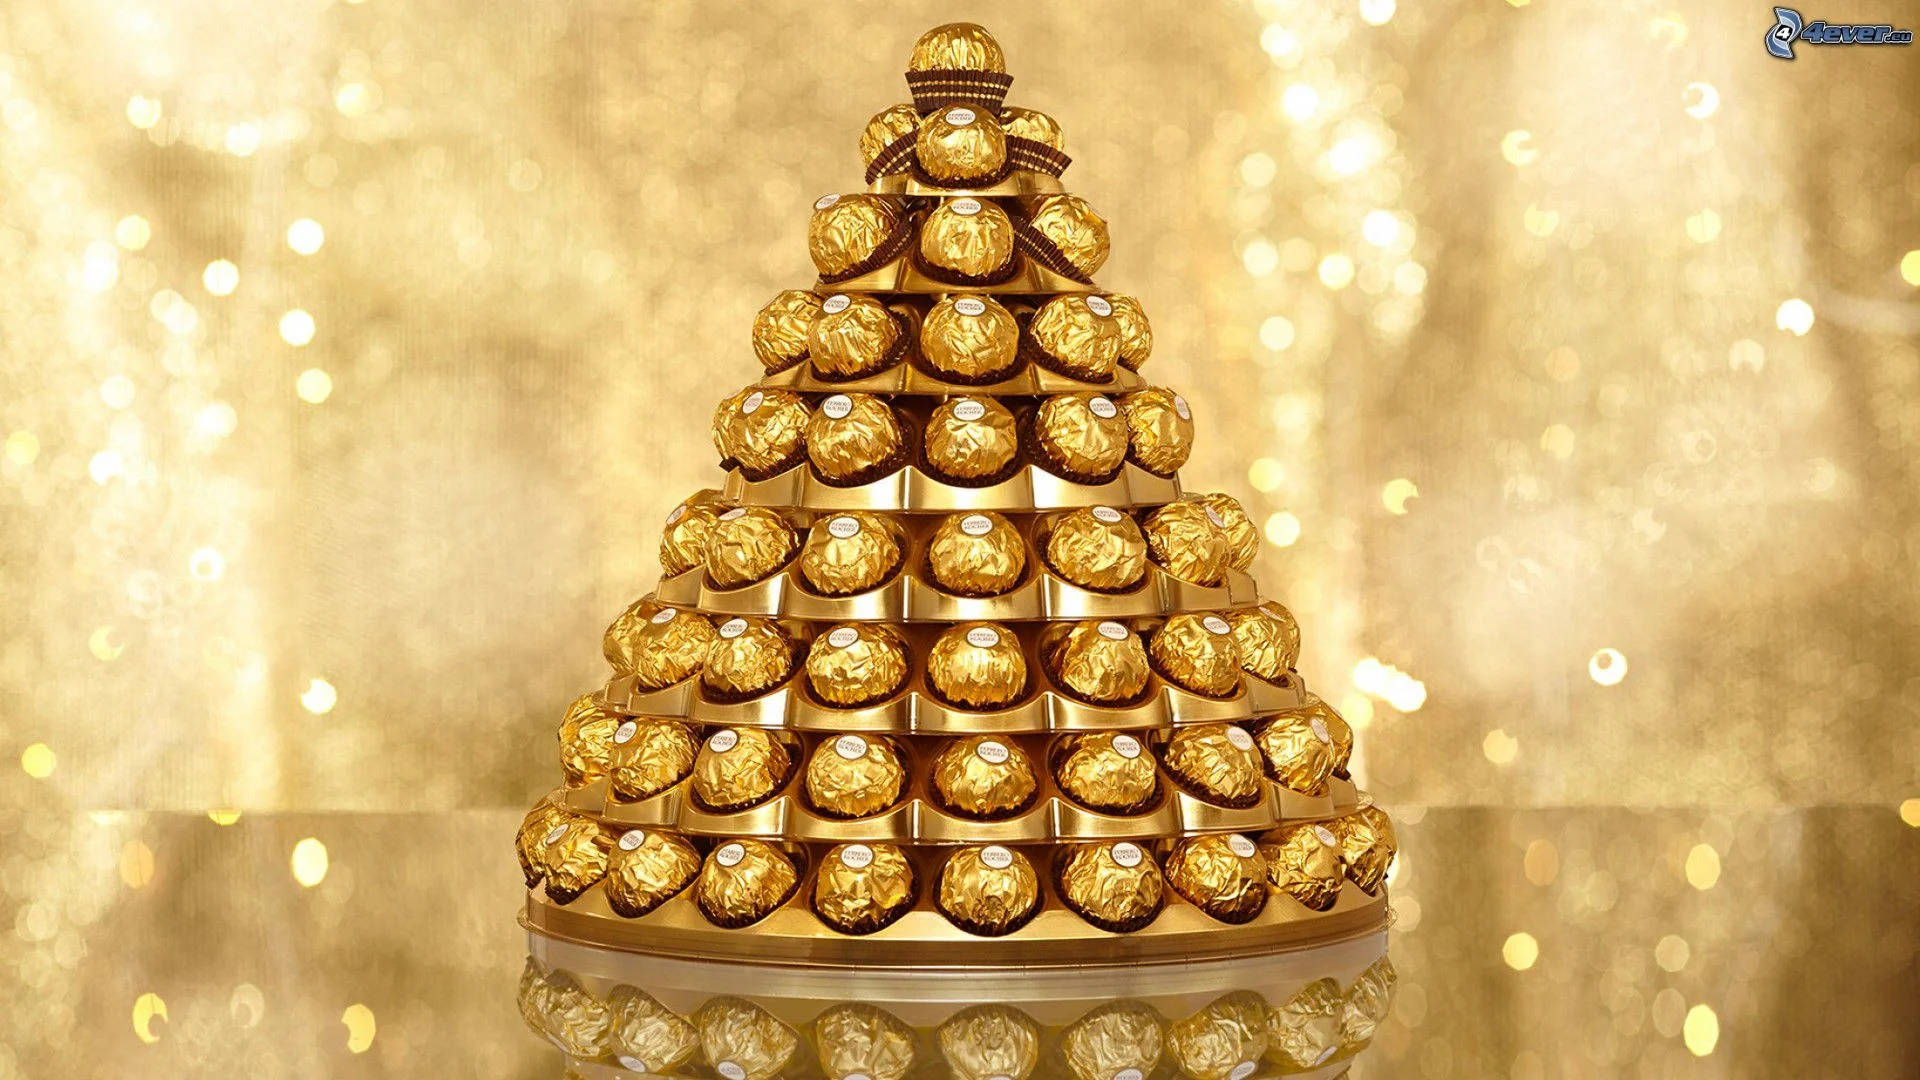 Elegant Pyramid Of Ferrero Rocher Chocolates Wrapped In Gold Foil